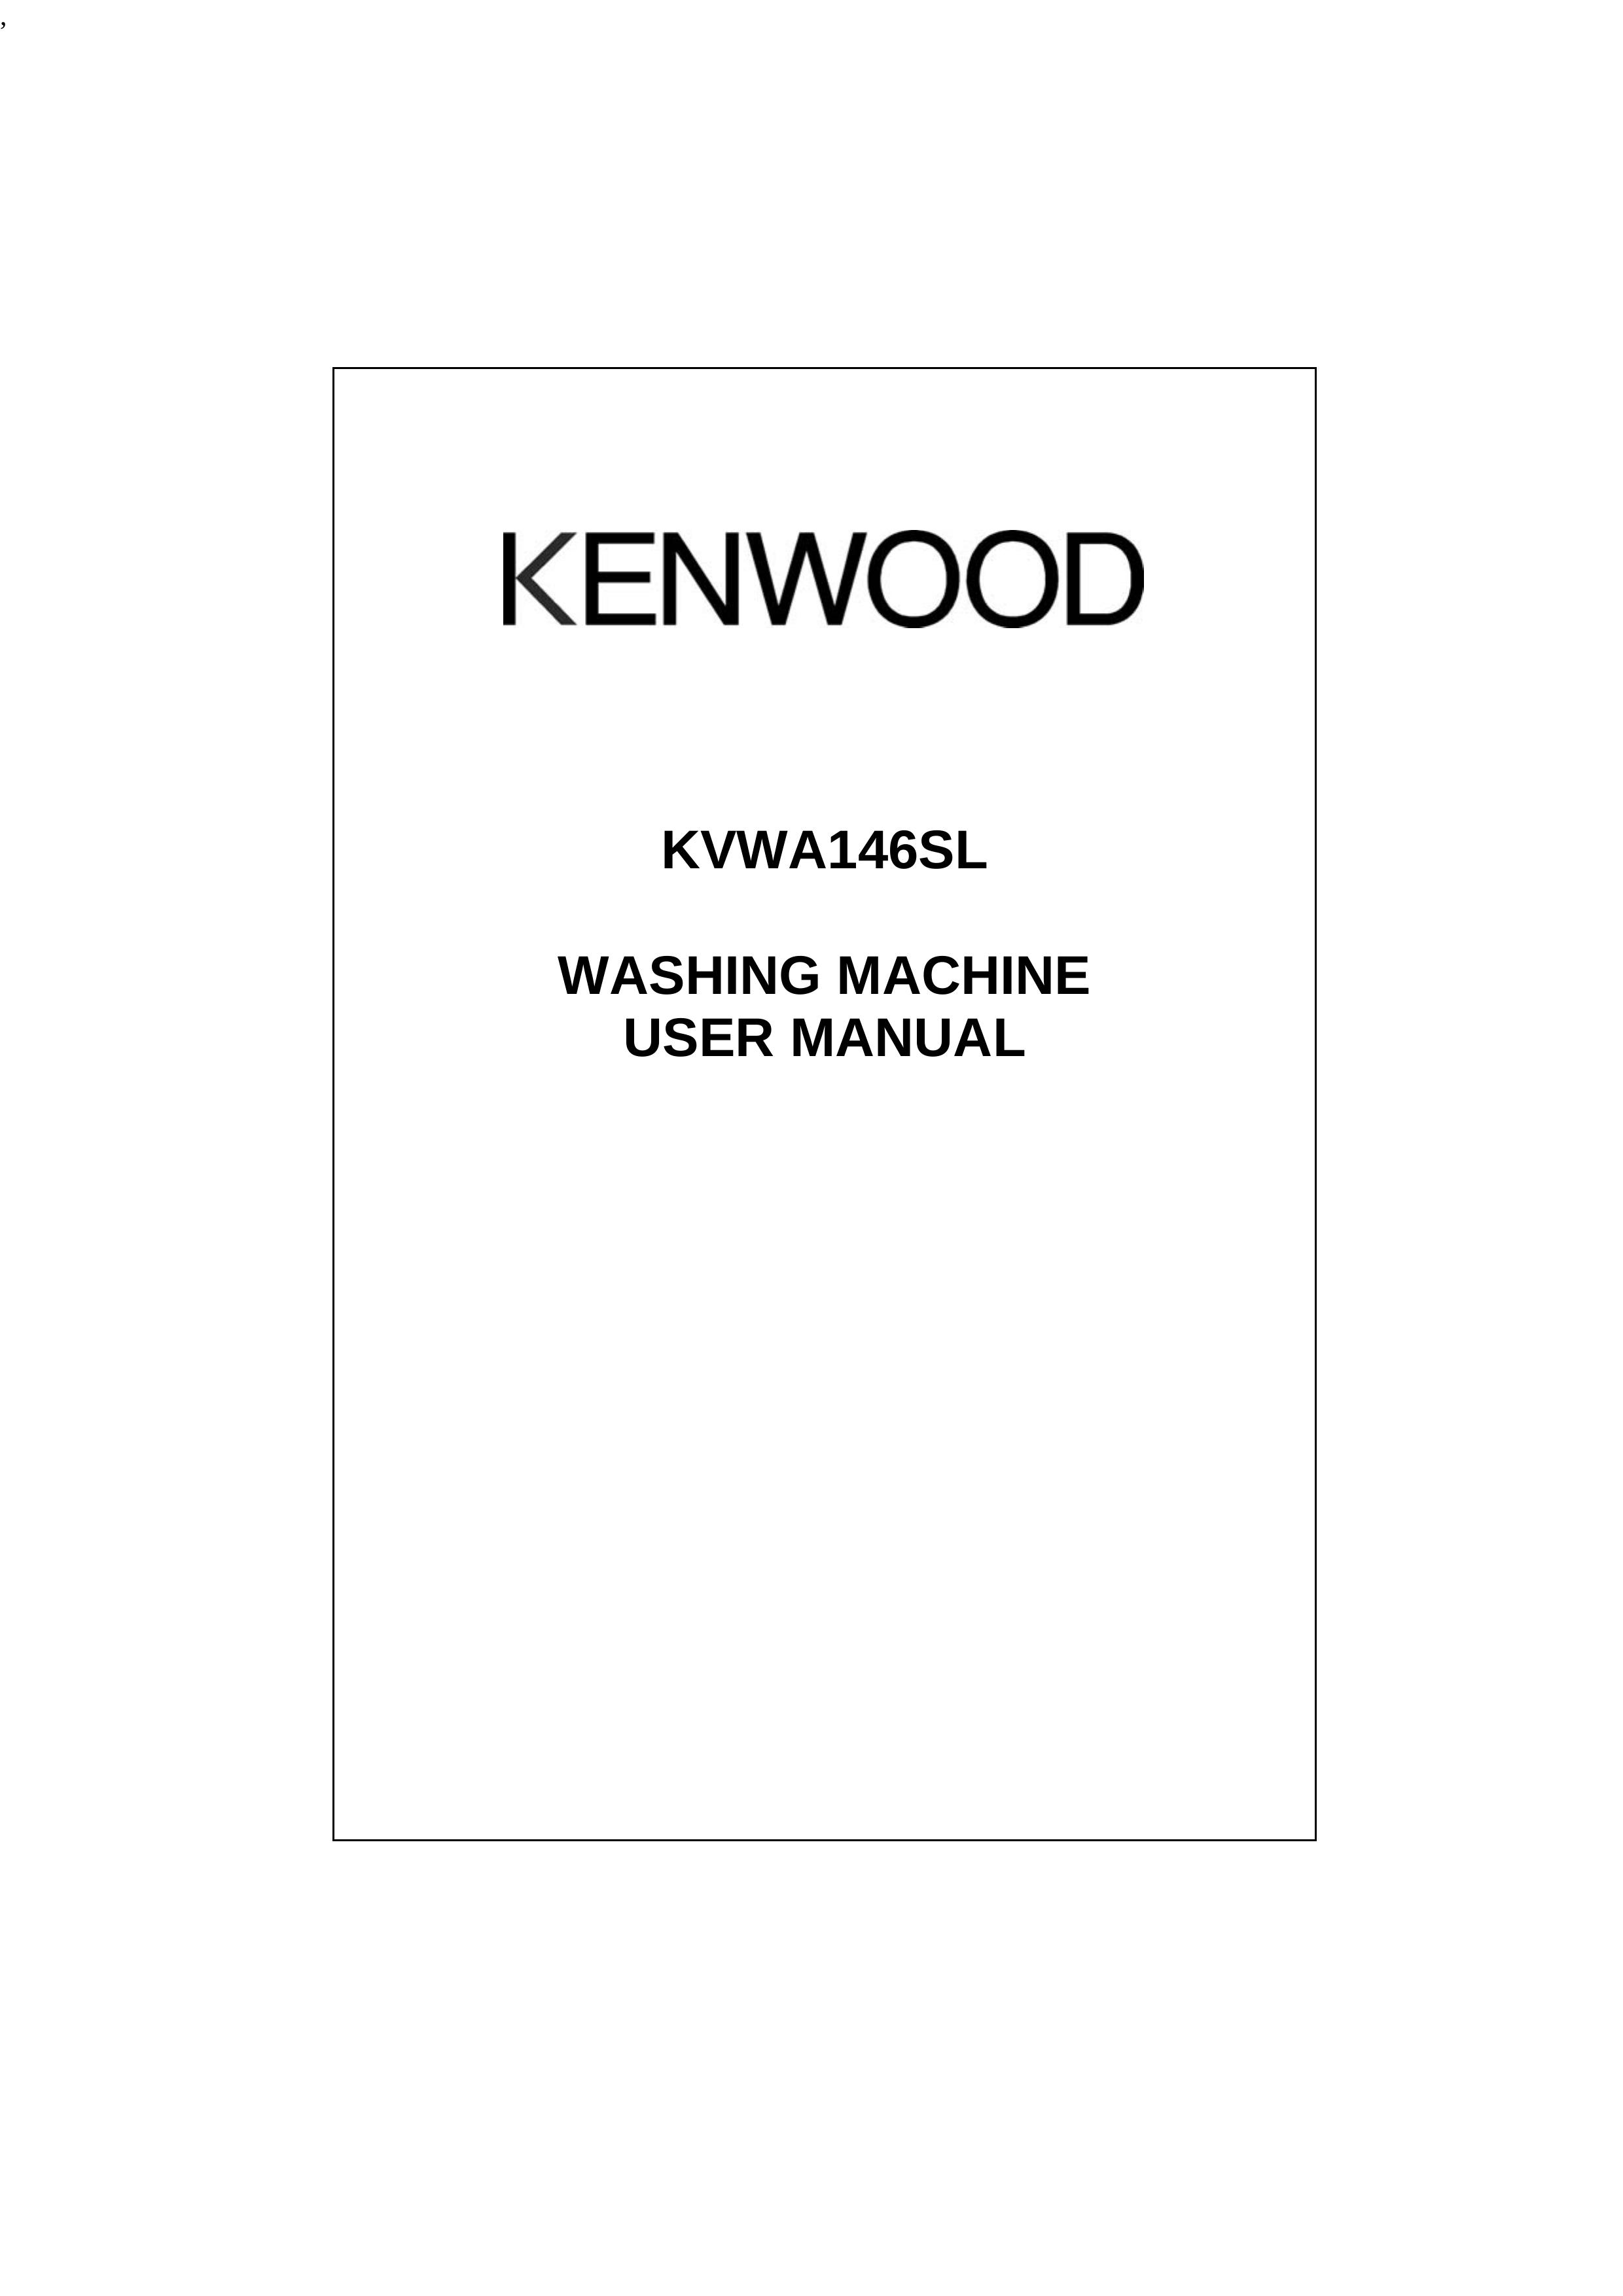 Kenwood KVWA146SL Washer User Manual